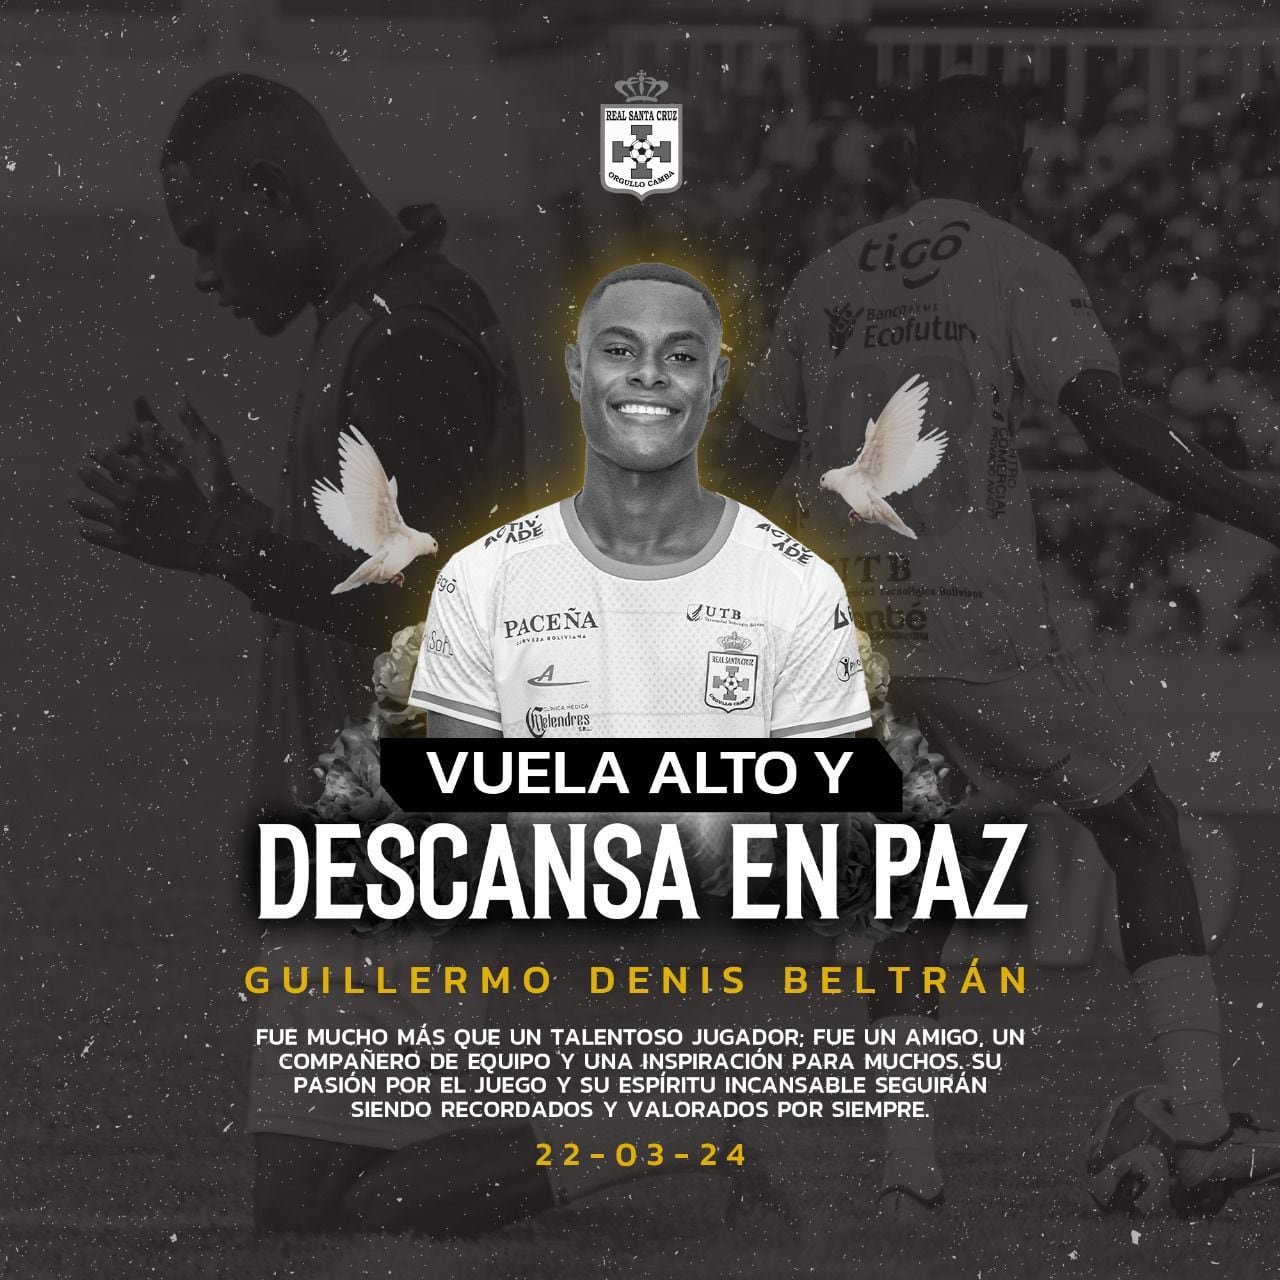 Guillermo Denis Beltrán